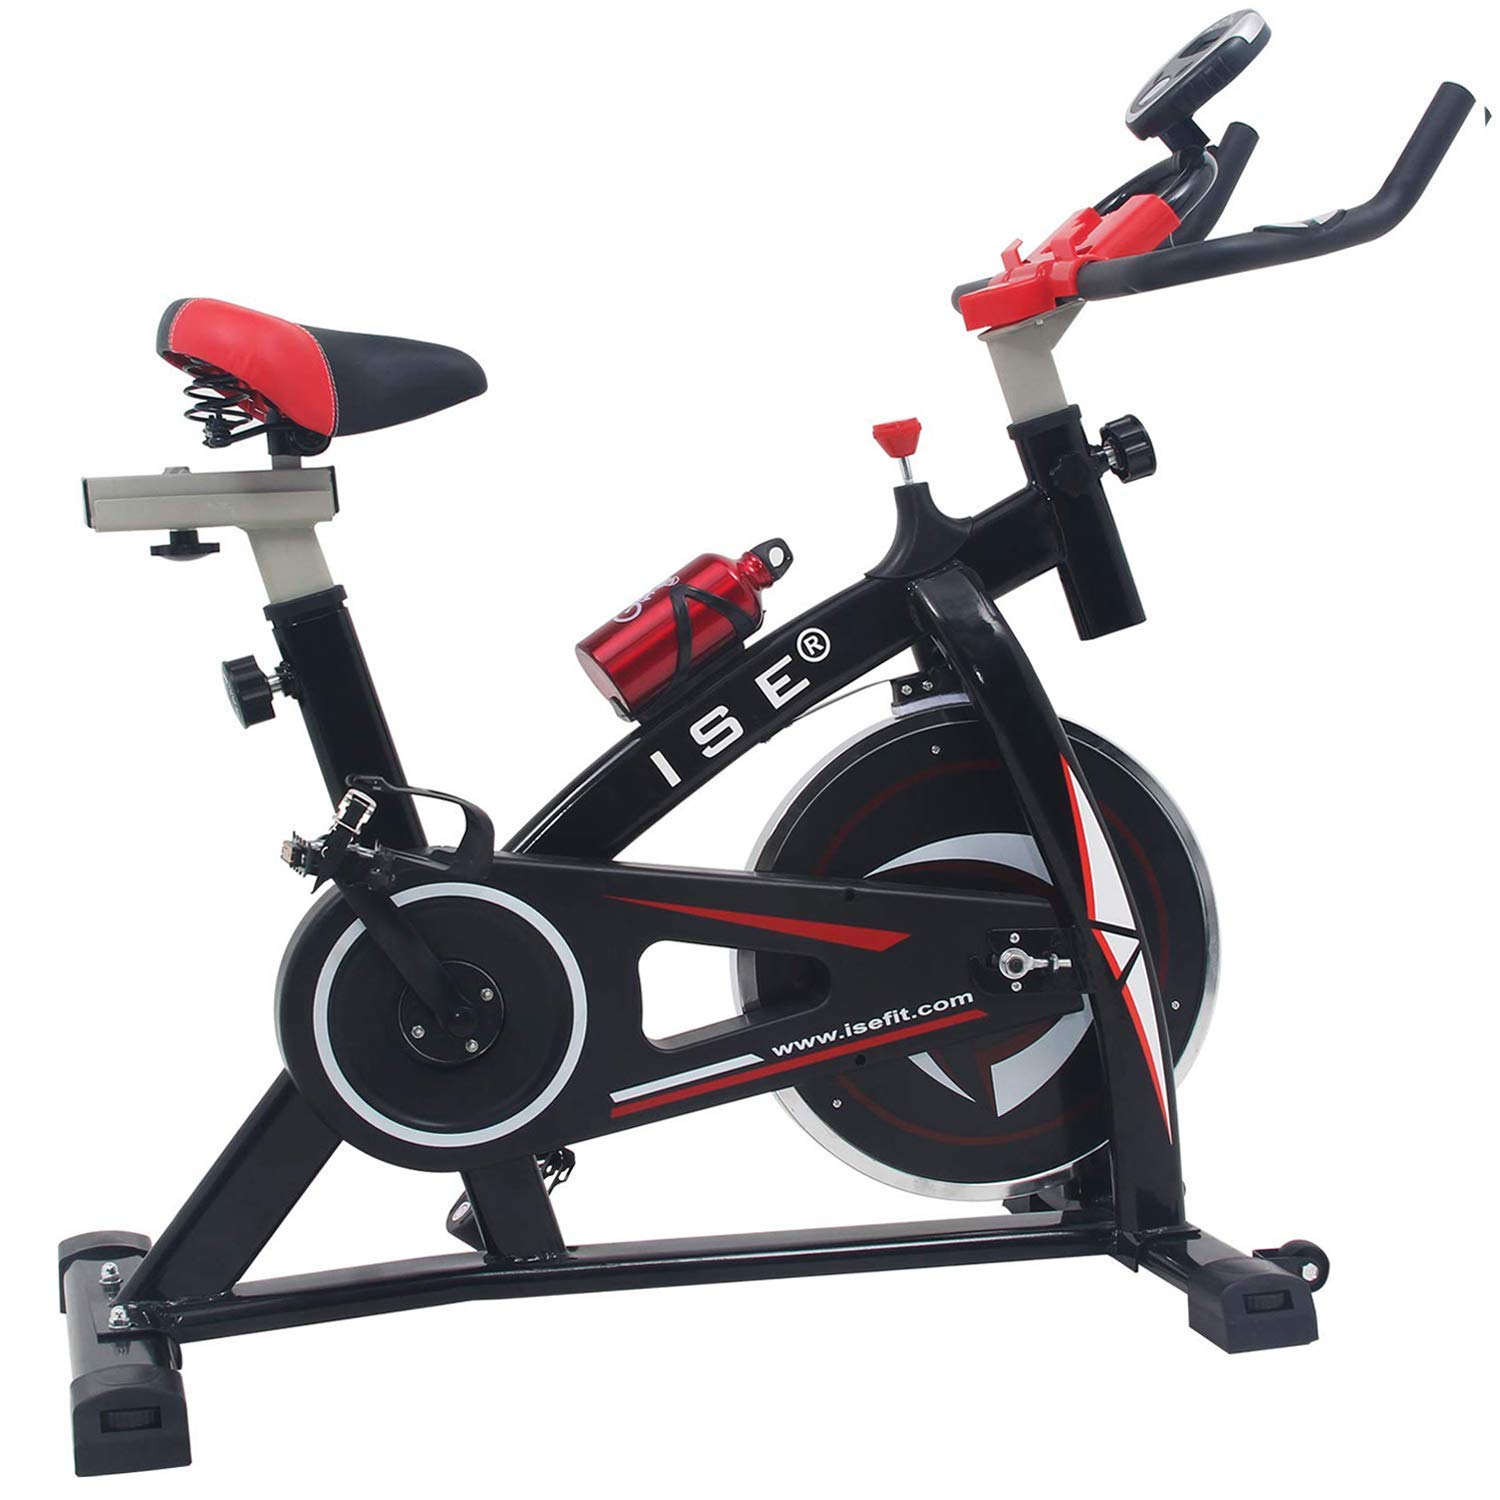 Heimtrainer Ergometer Fitness Fahrrad Indoor Cycling Trimmrad Pulsmesser LCD 